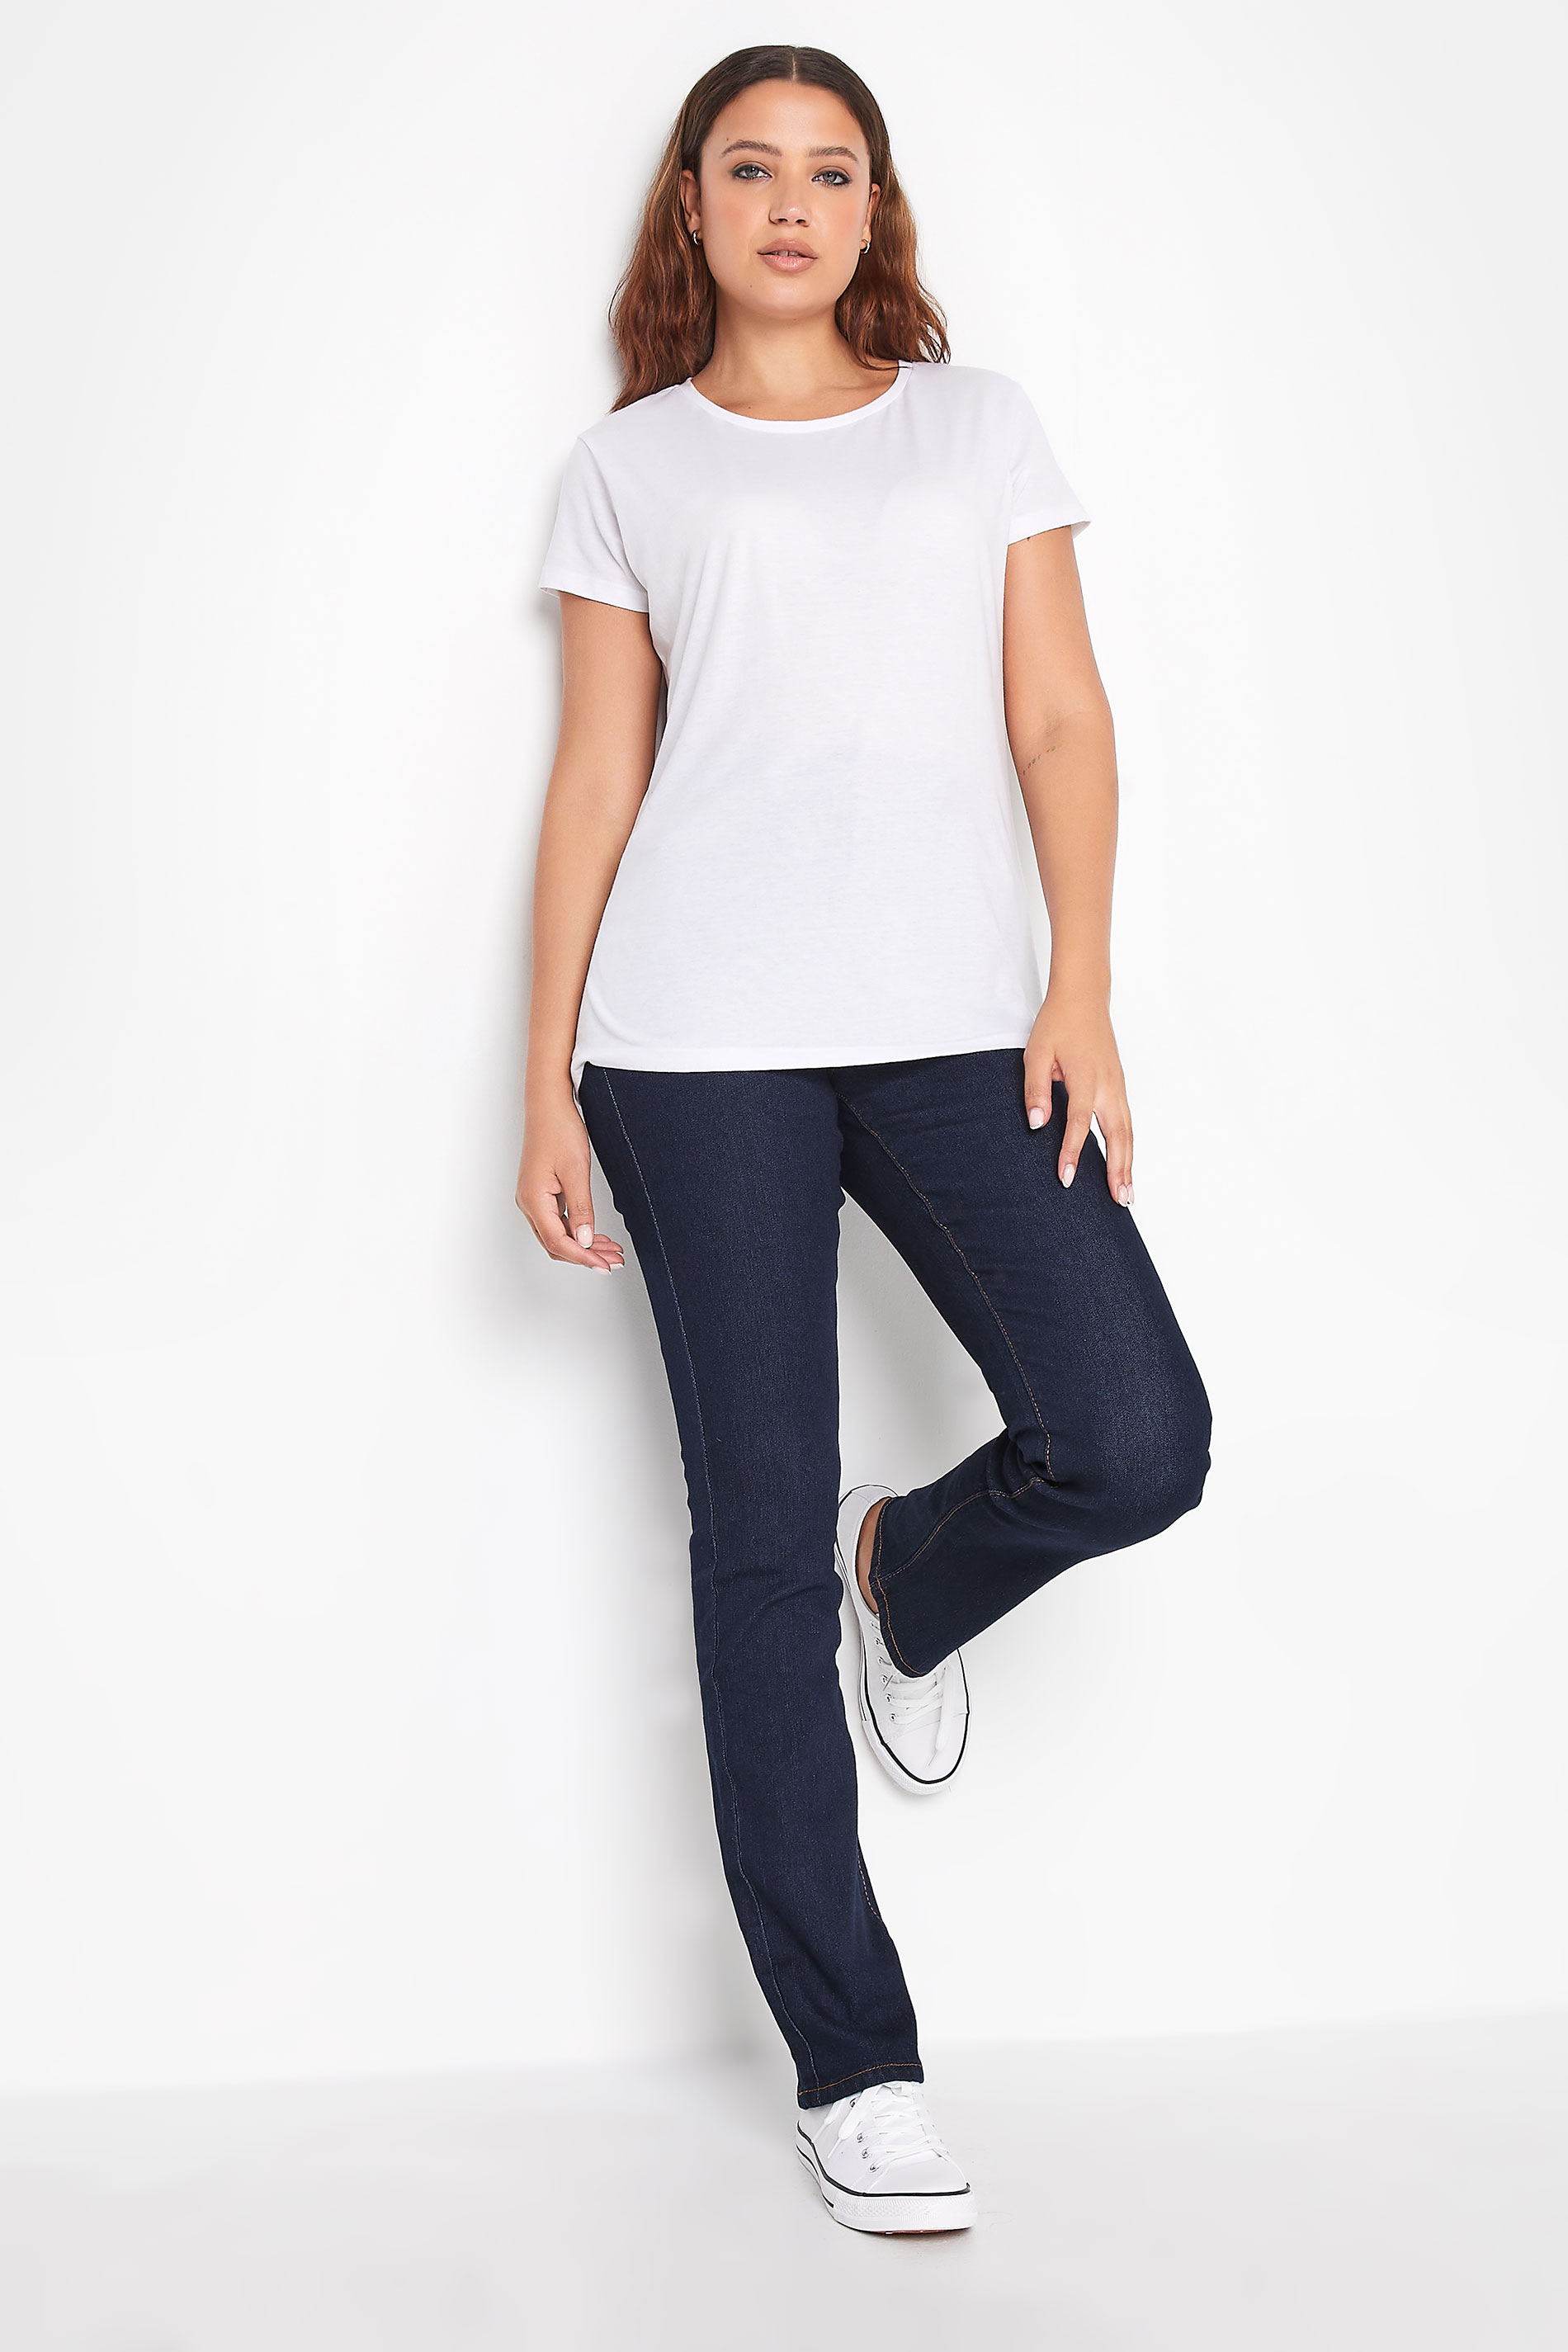 LTS Tall Women's Indigo Blue Straight Leg Jeans | Long Tall Sally  2